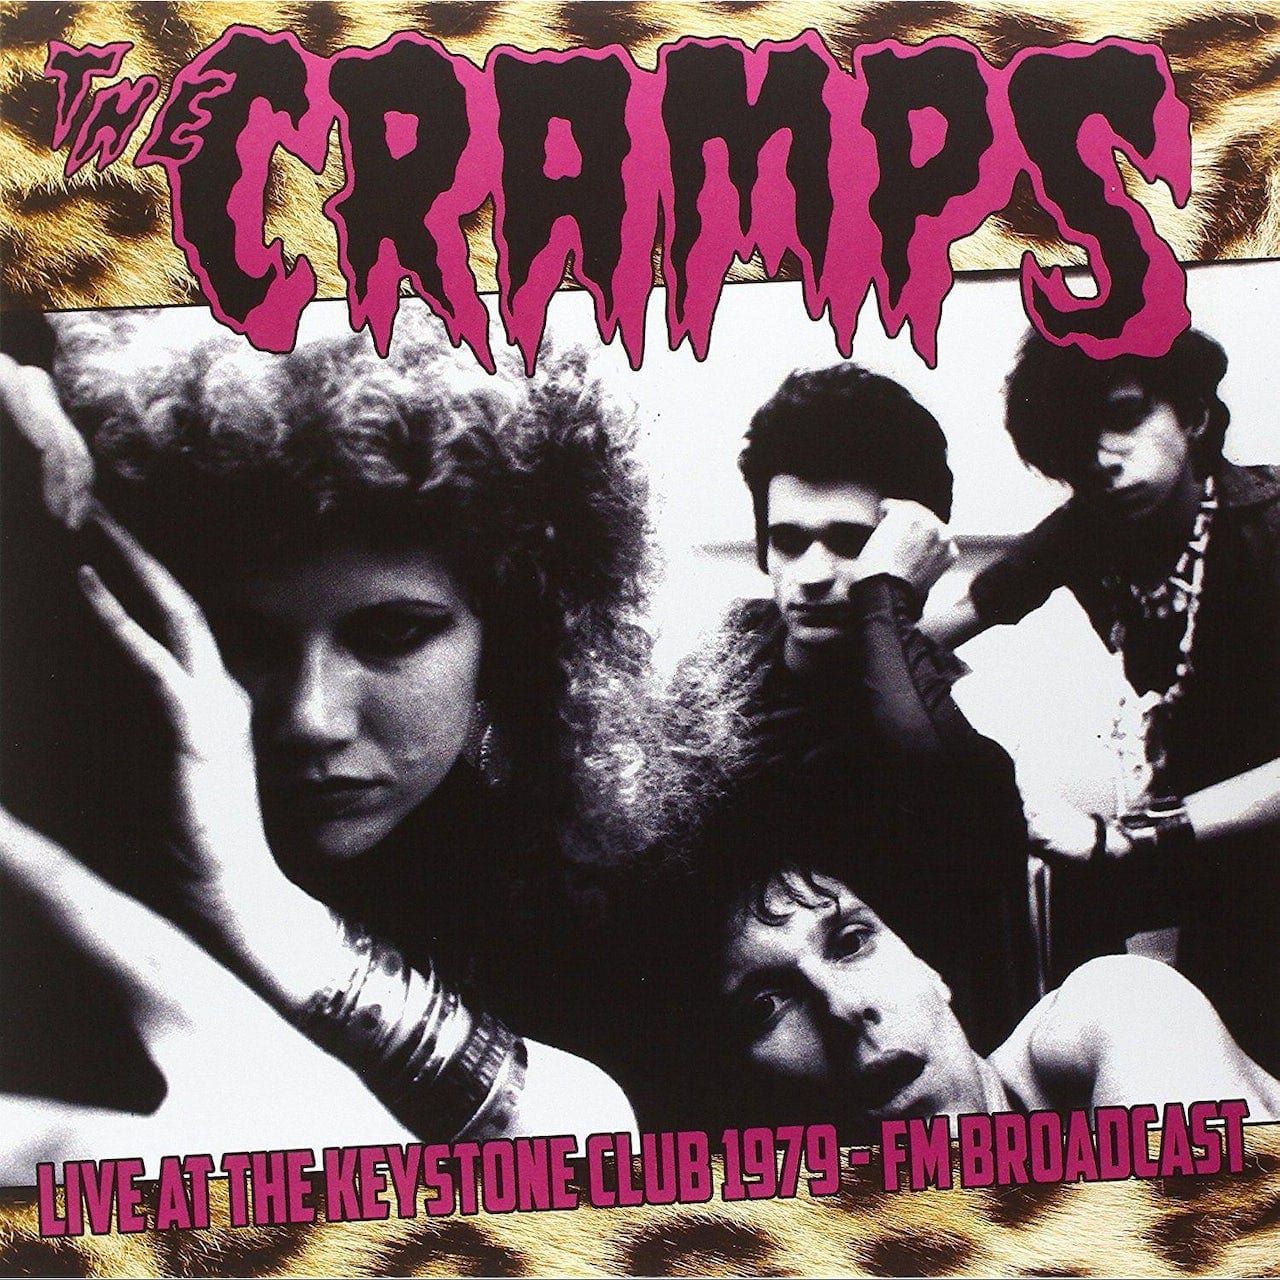 THE CRAMPS: Live at the Keystone Club 1979 • FM Broadcast LP